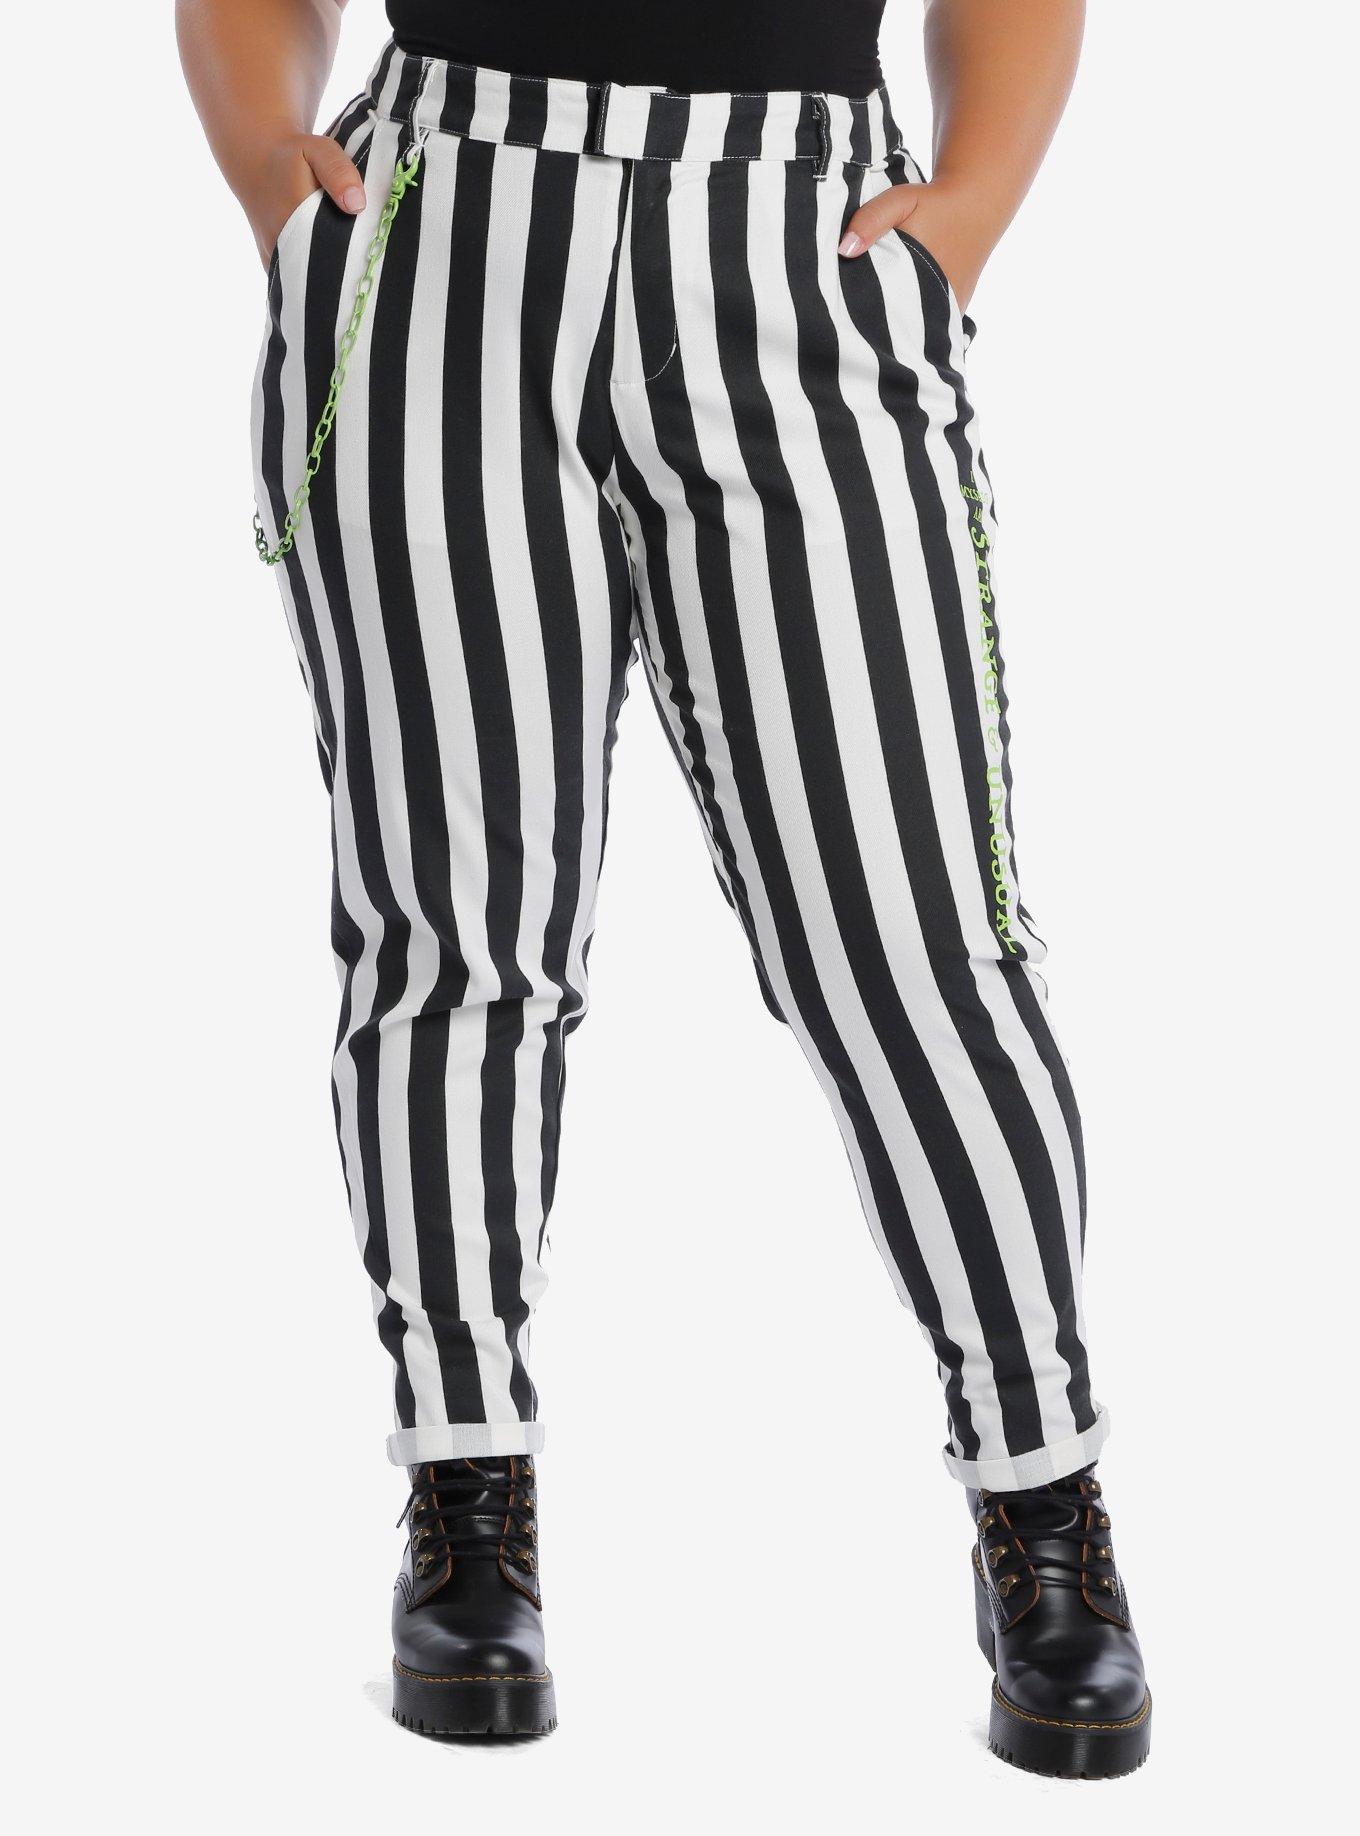 Beetlejuice Black & White Stripe Chain Pants Plus Size